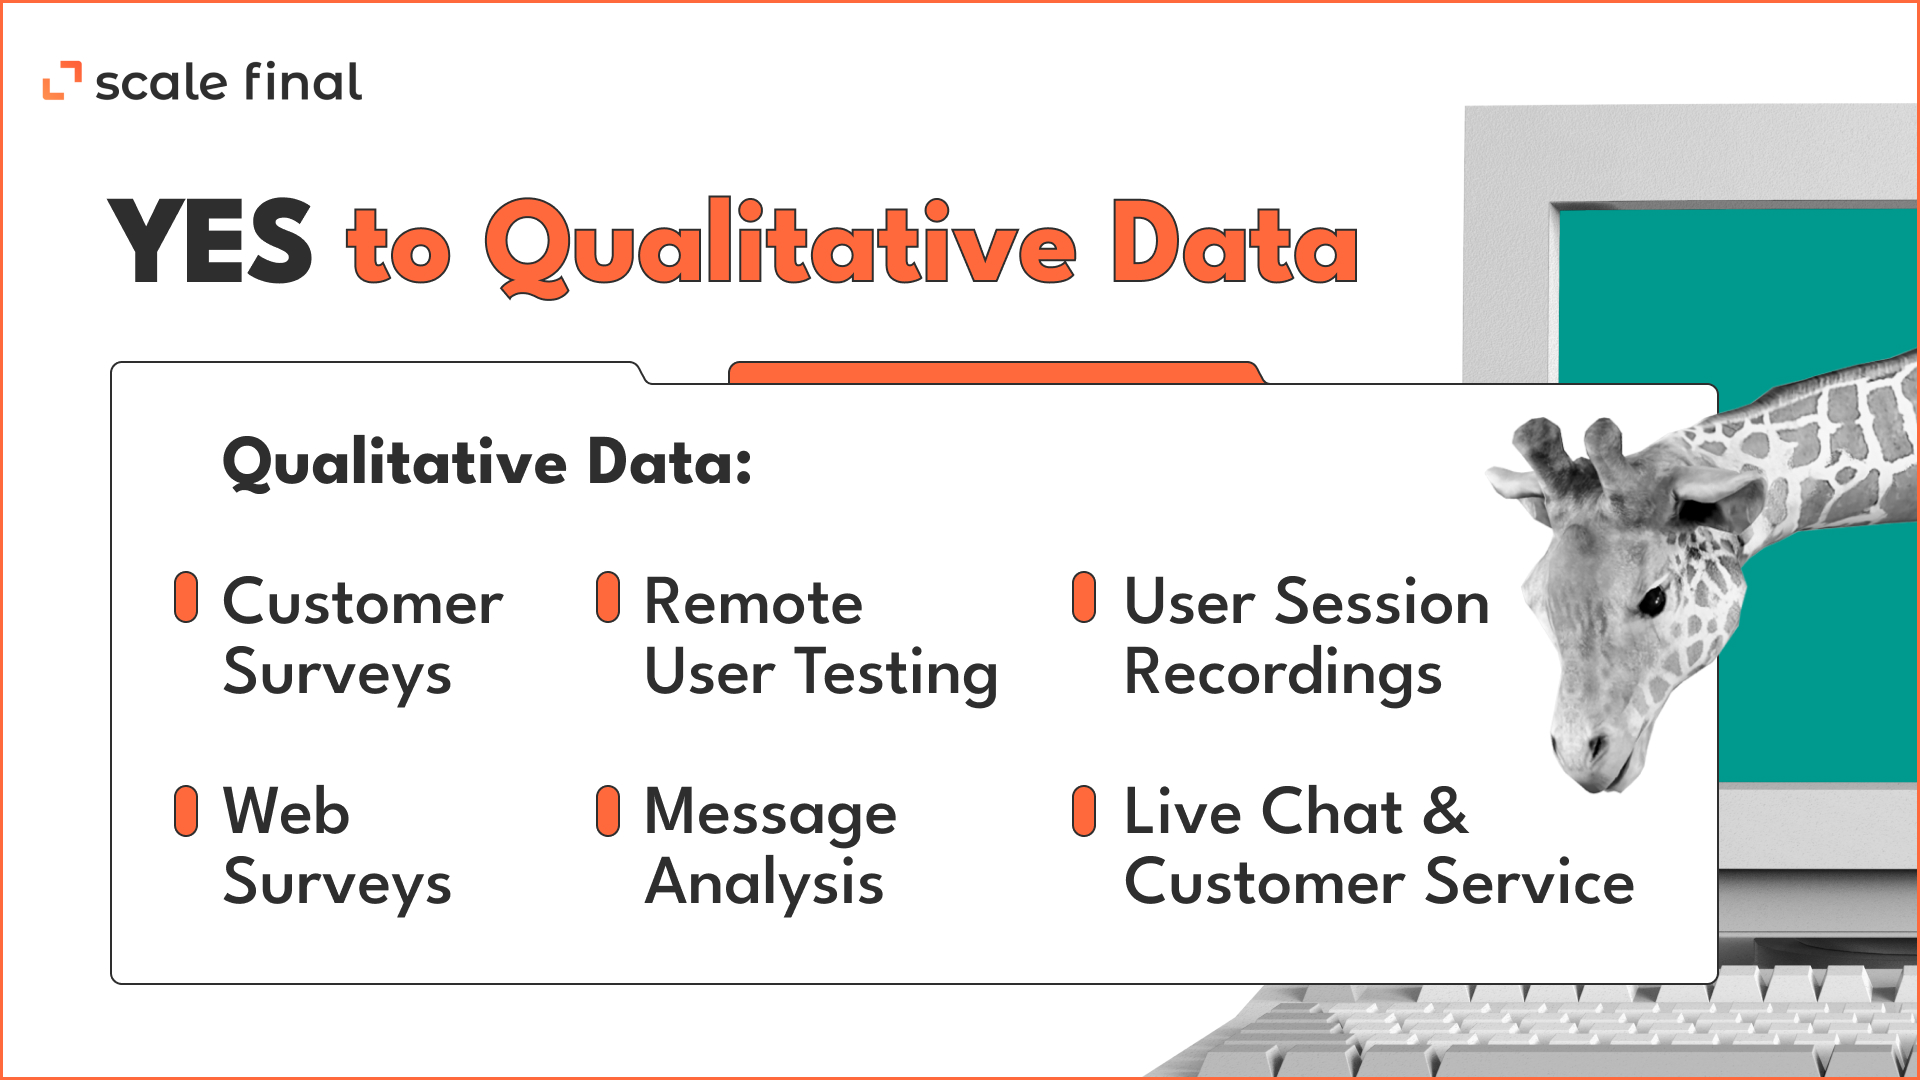 Qualitative data is 